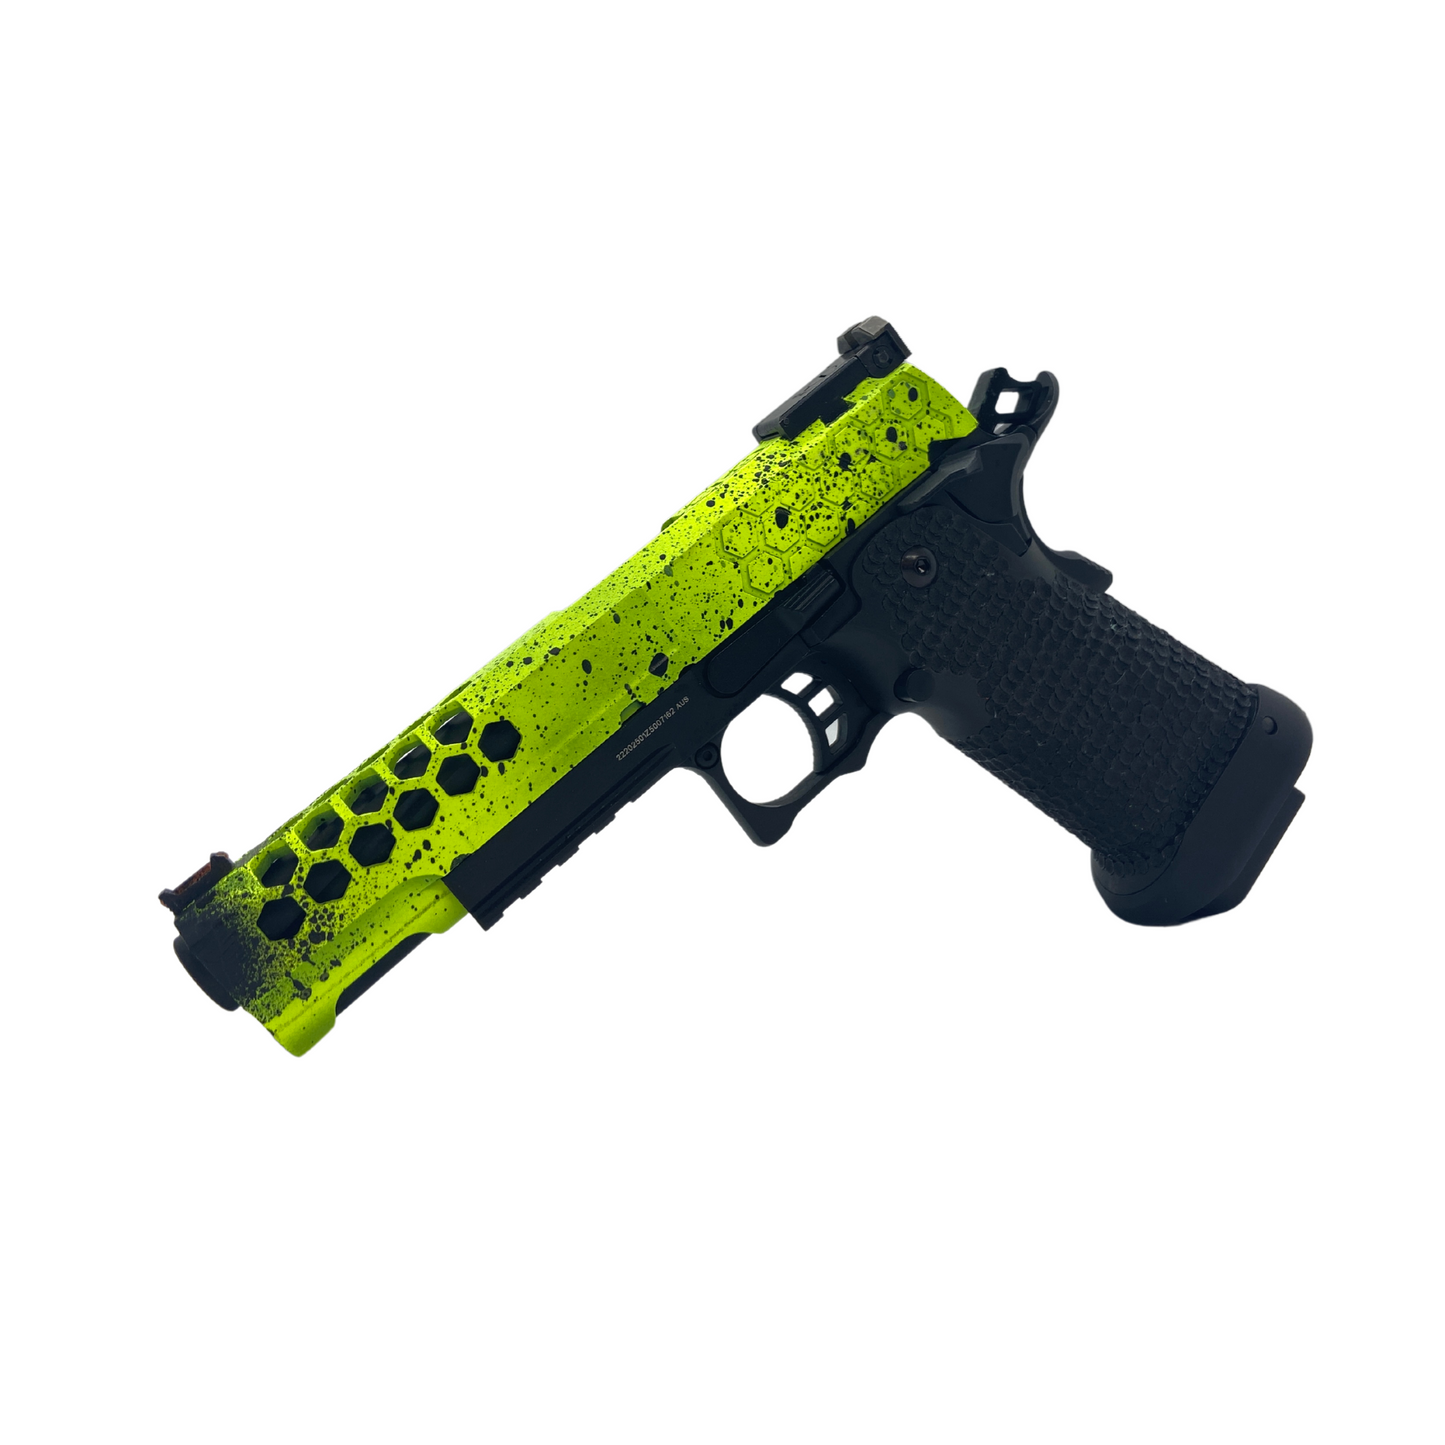 Neon Yellow G/E G3399 Hi-Capa Hex Green Gas Pistol - Gel Blaster